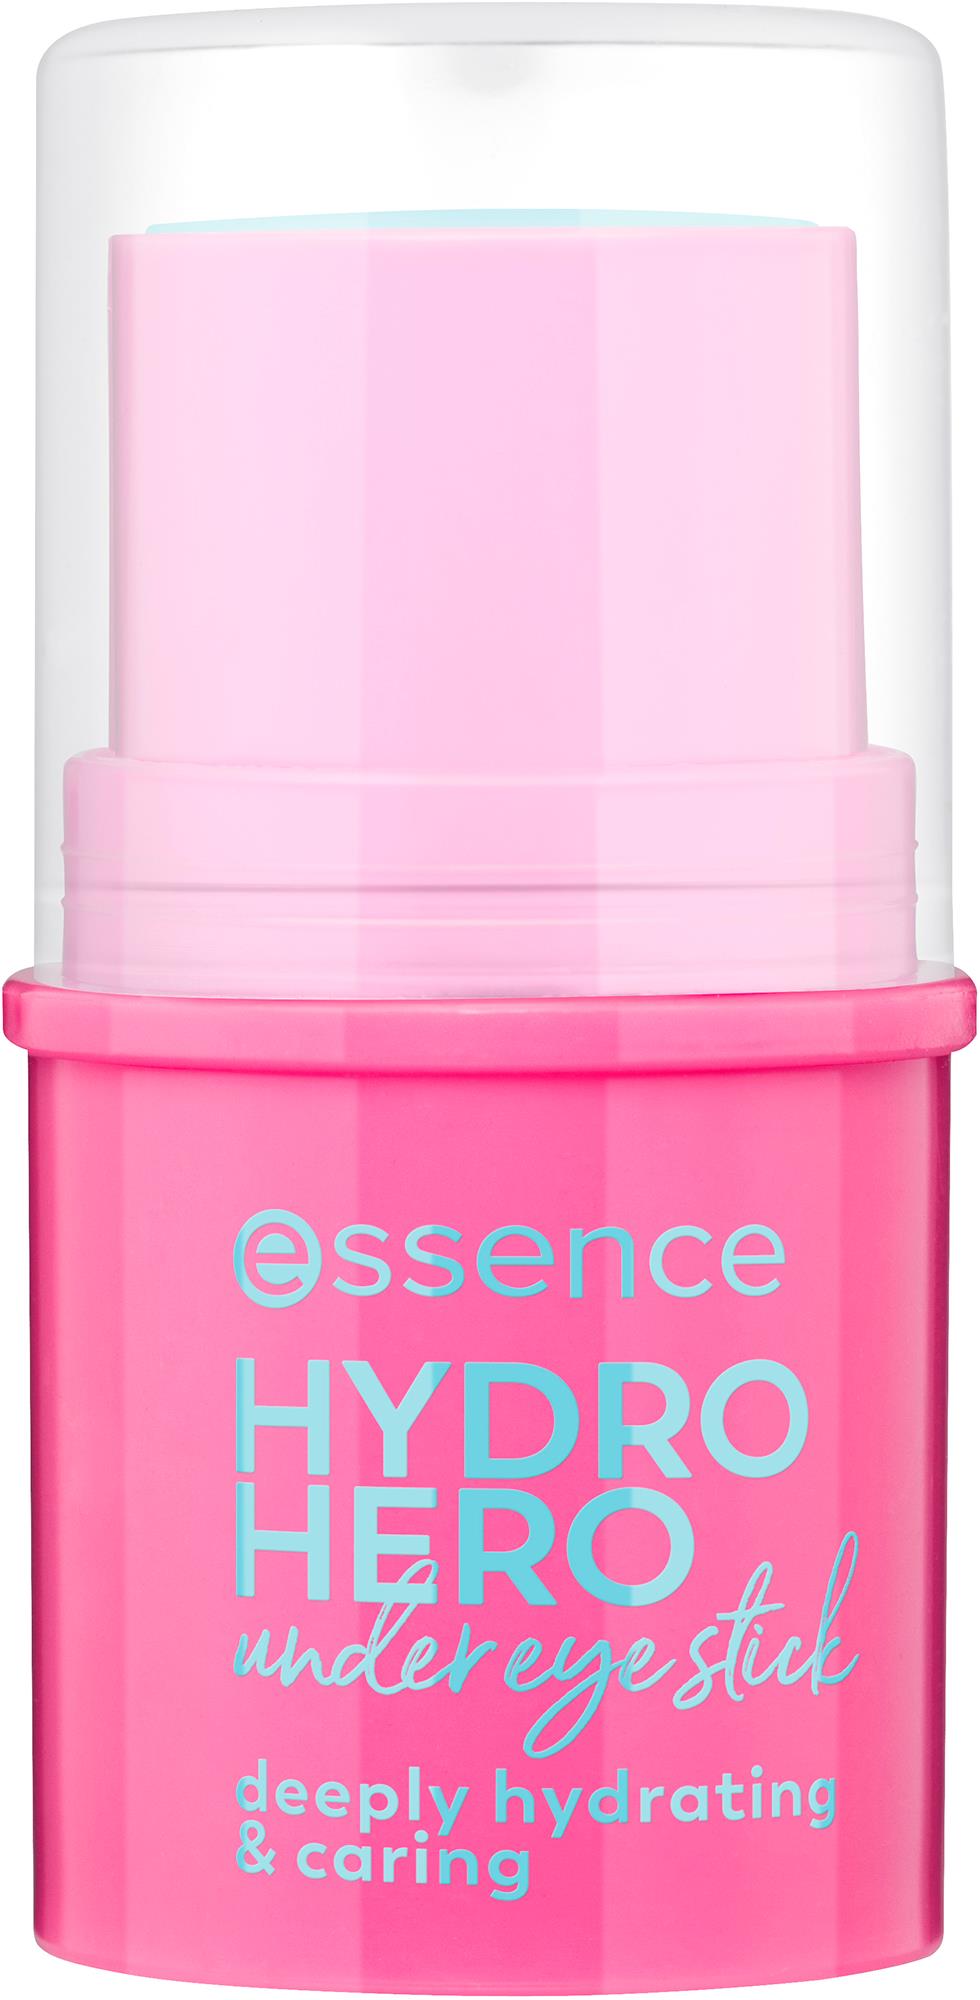 Essence hydro hero Review